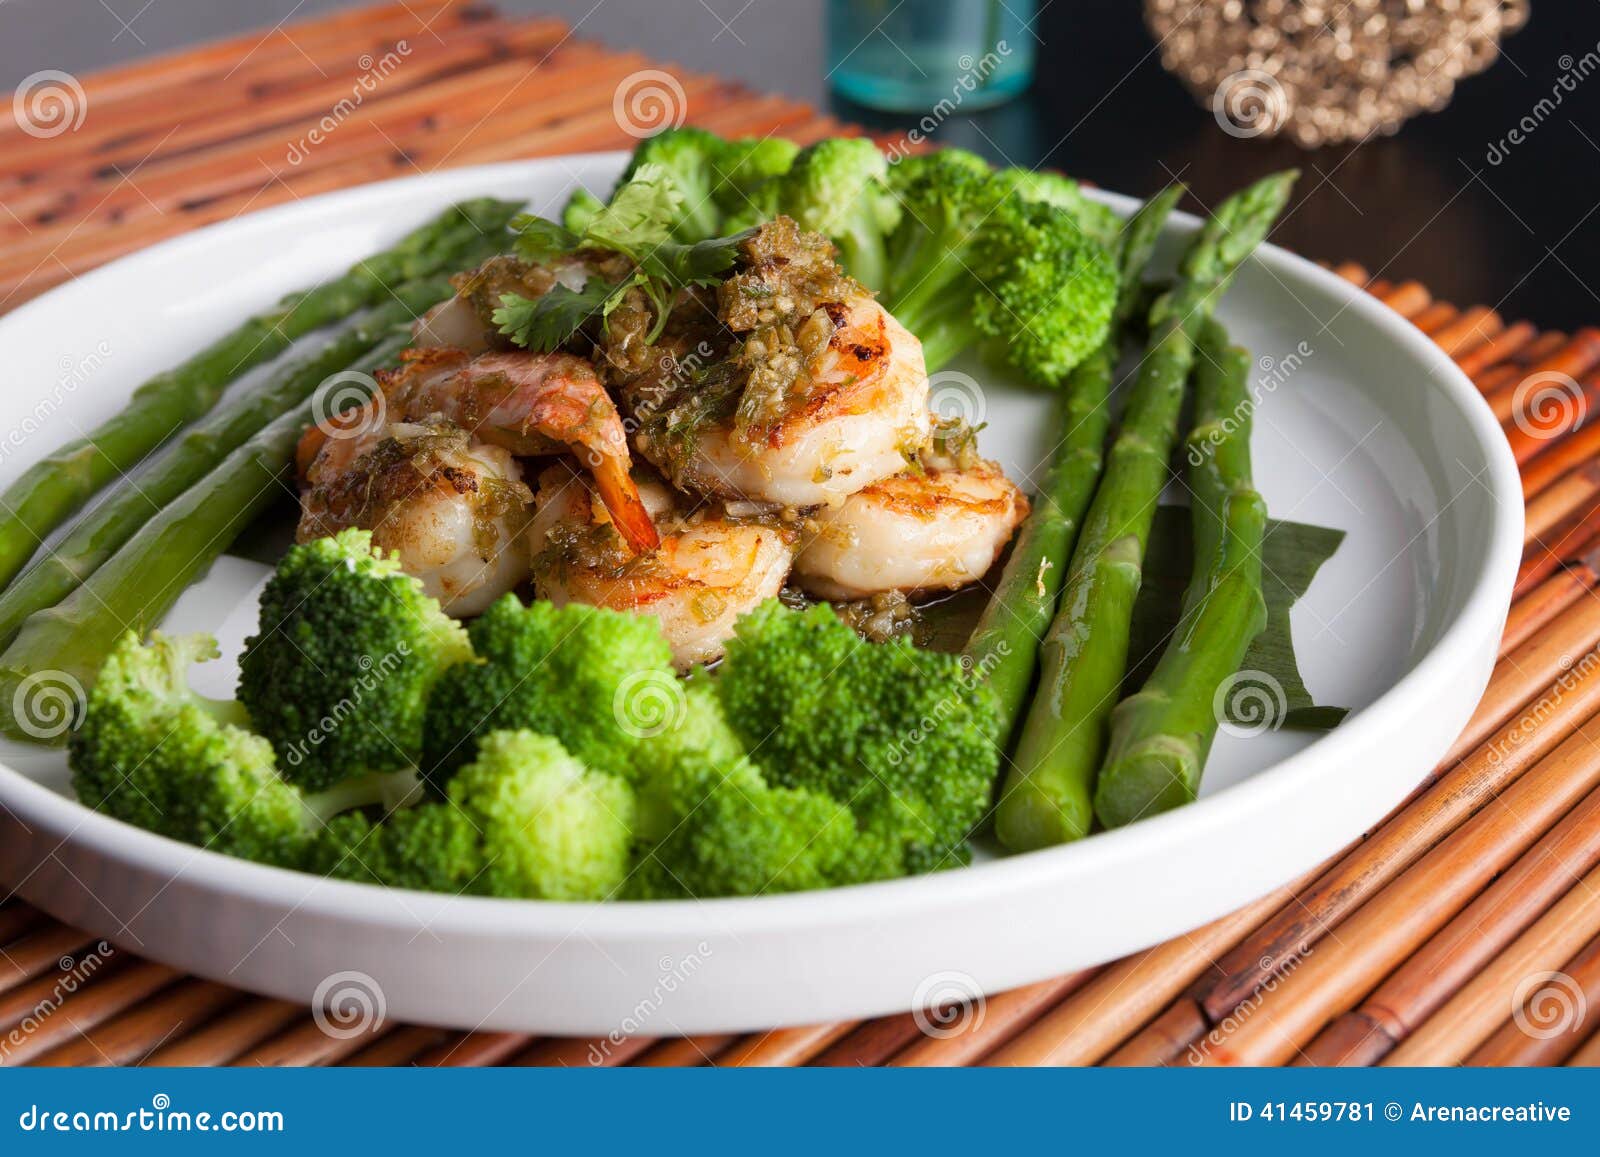 Shrimp Scampi with Asparagus Stock Image - Image of mediterranean, fine ...